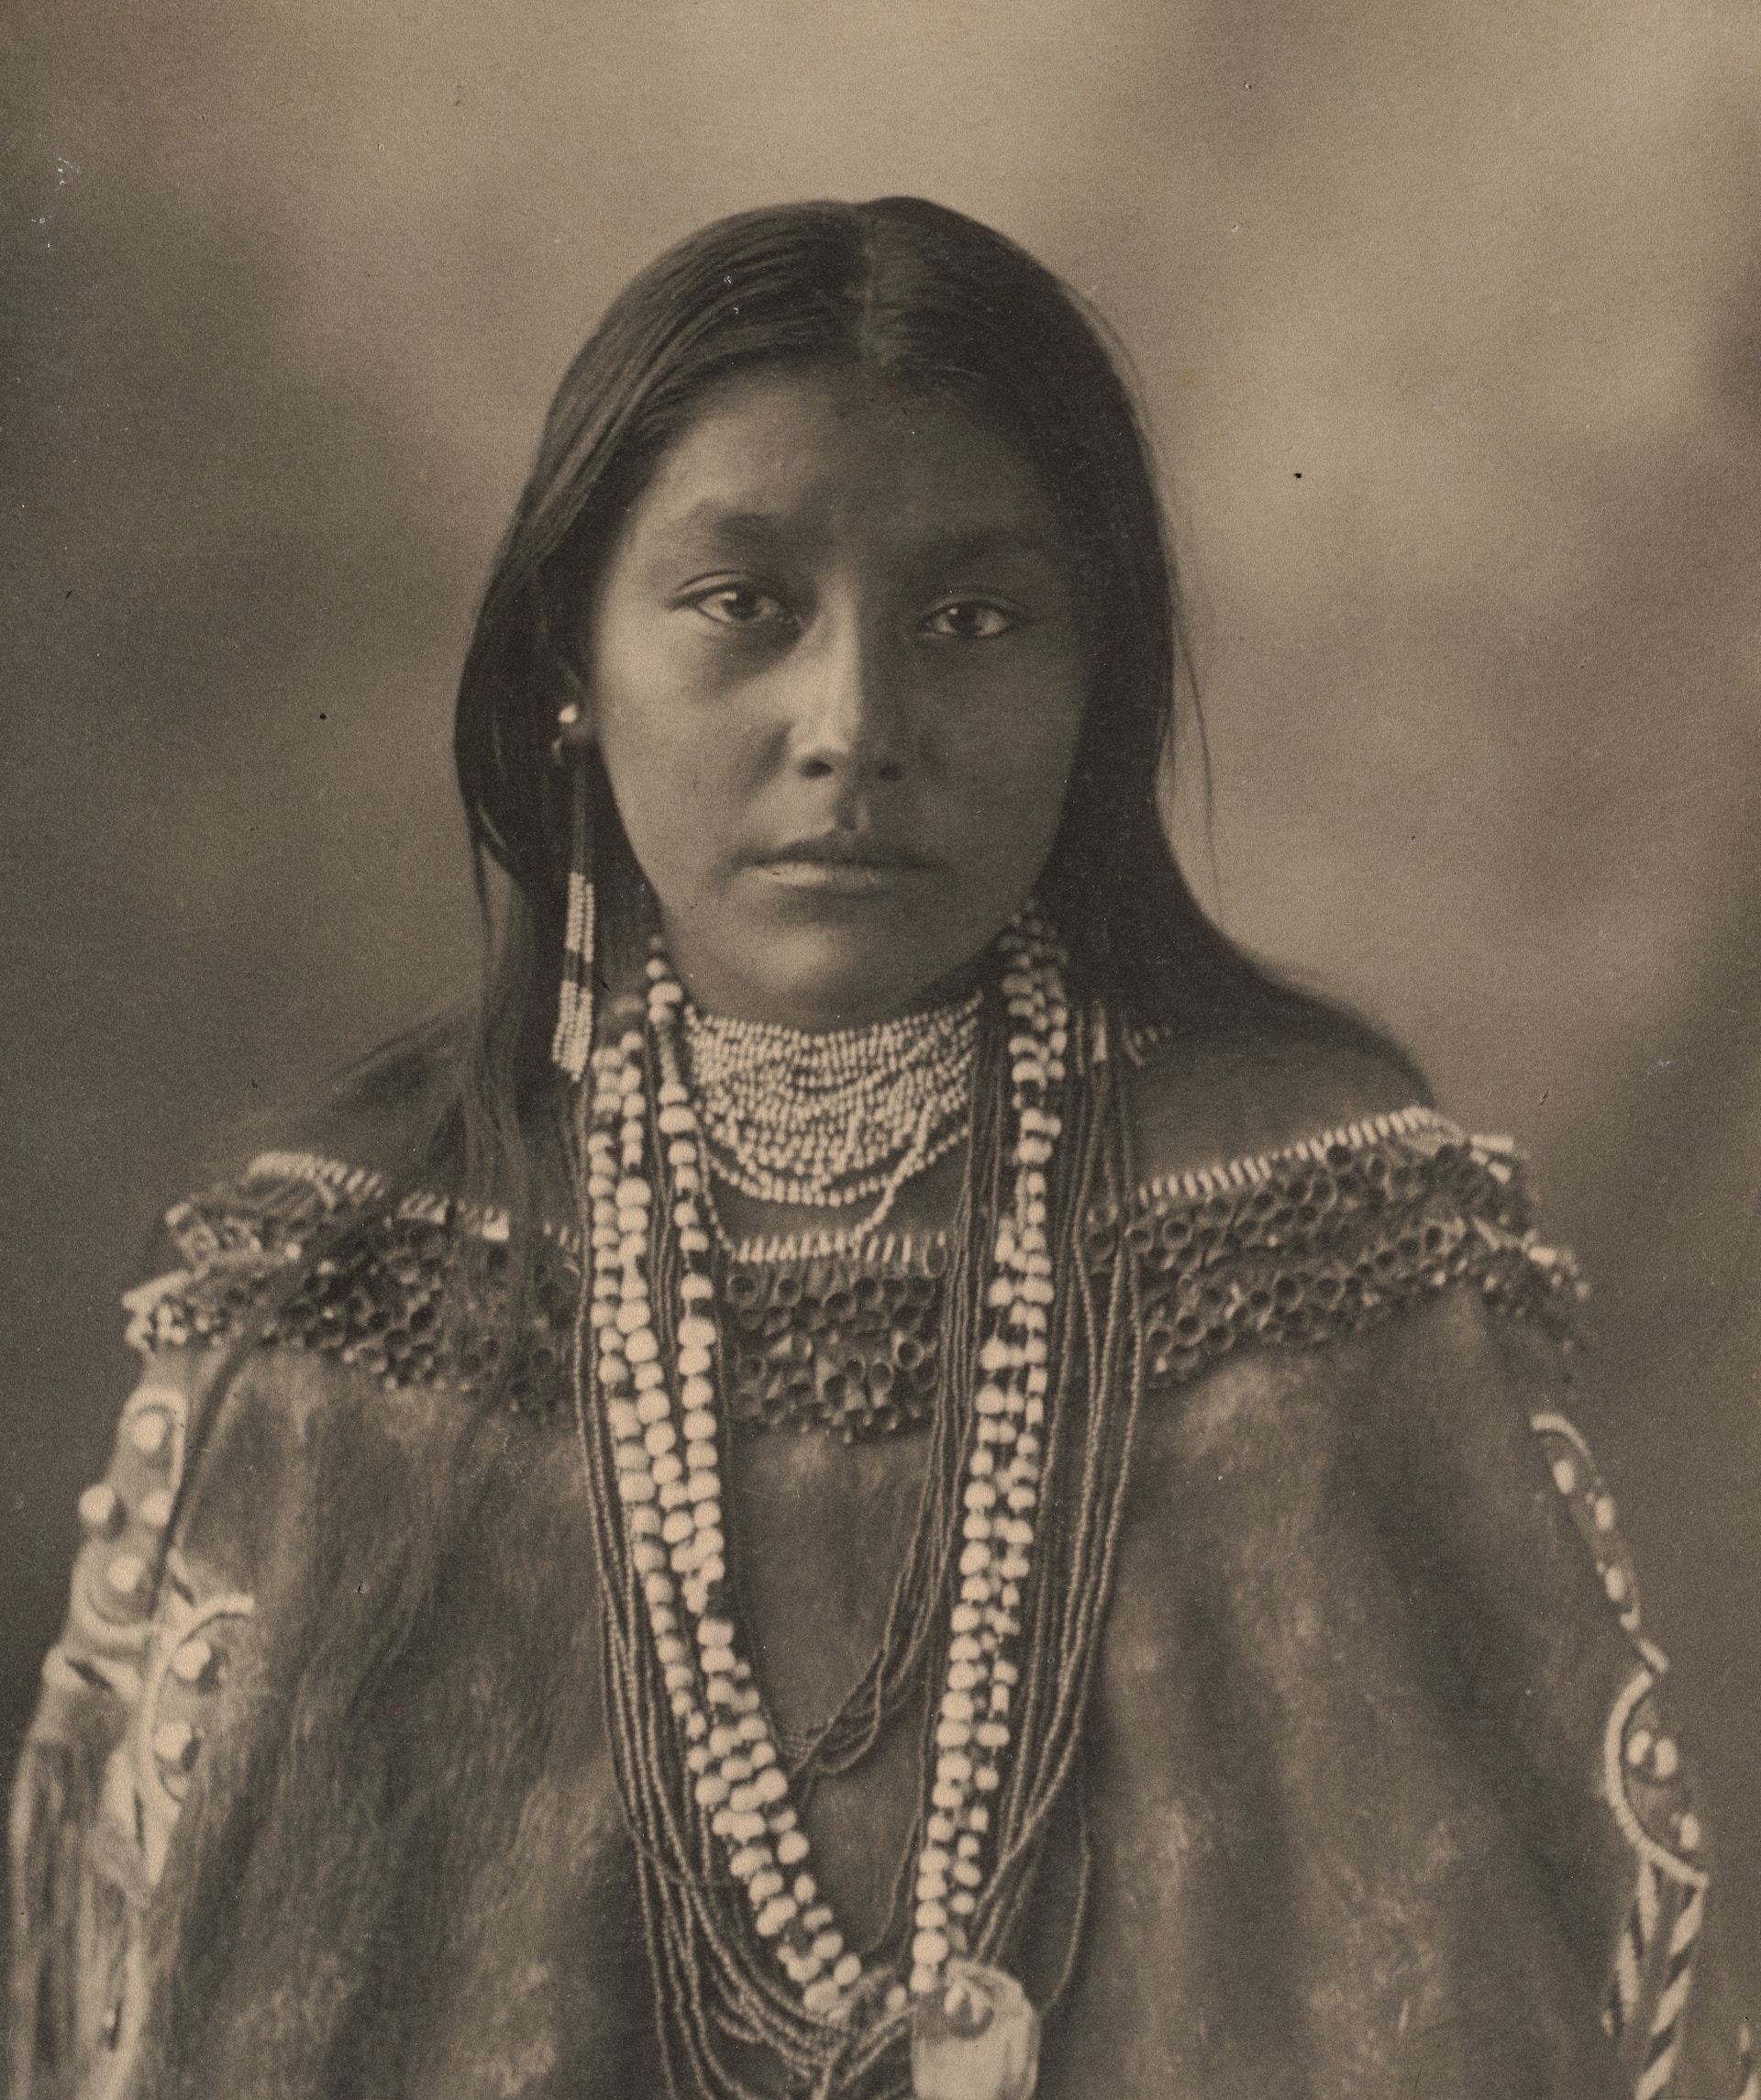 Young native american boy in origin clothes